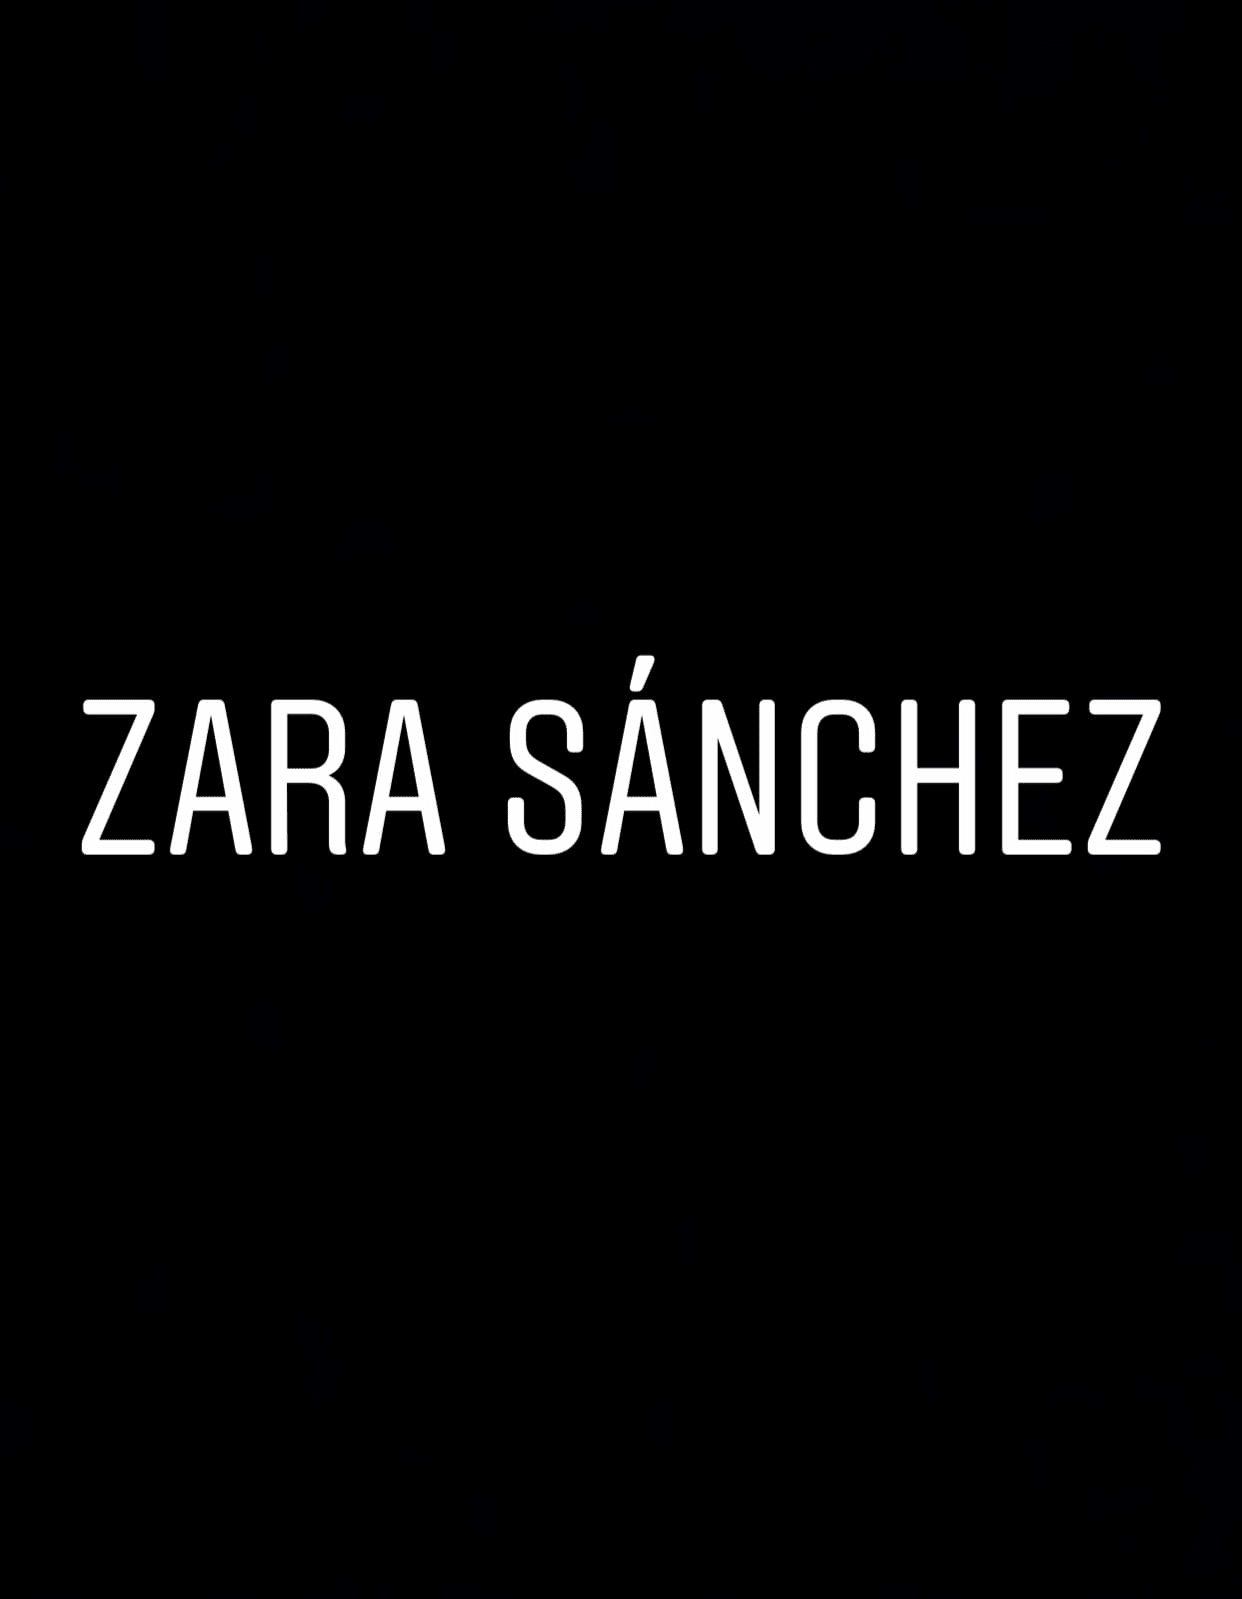 Zara Sánchez